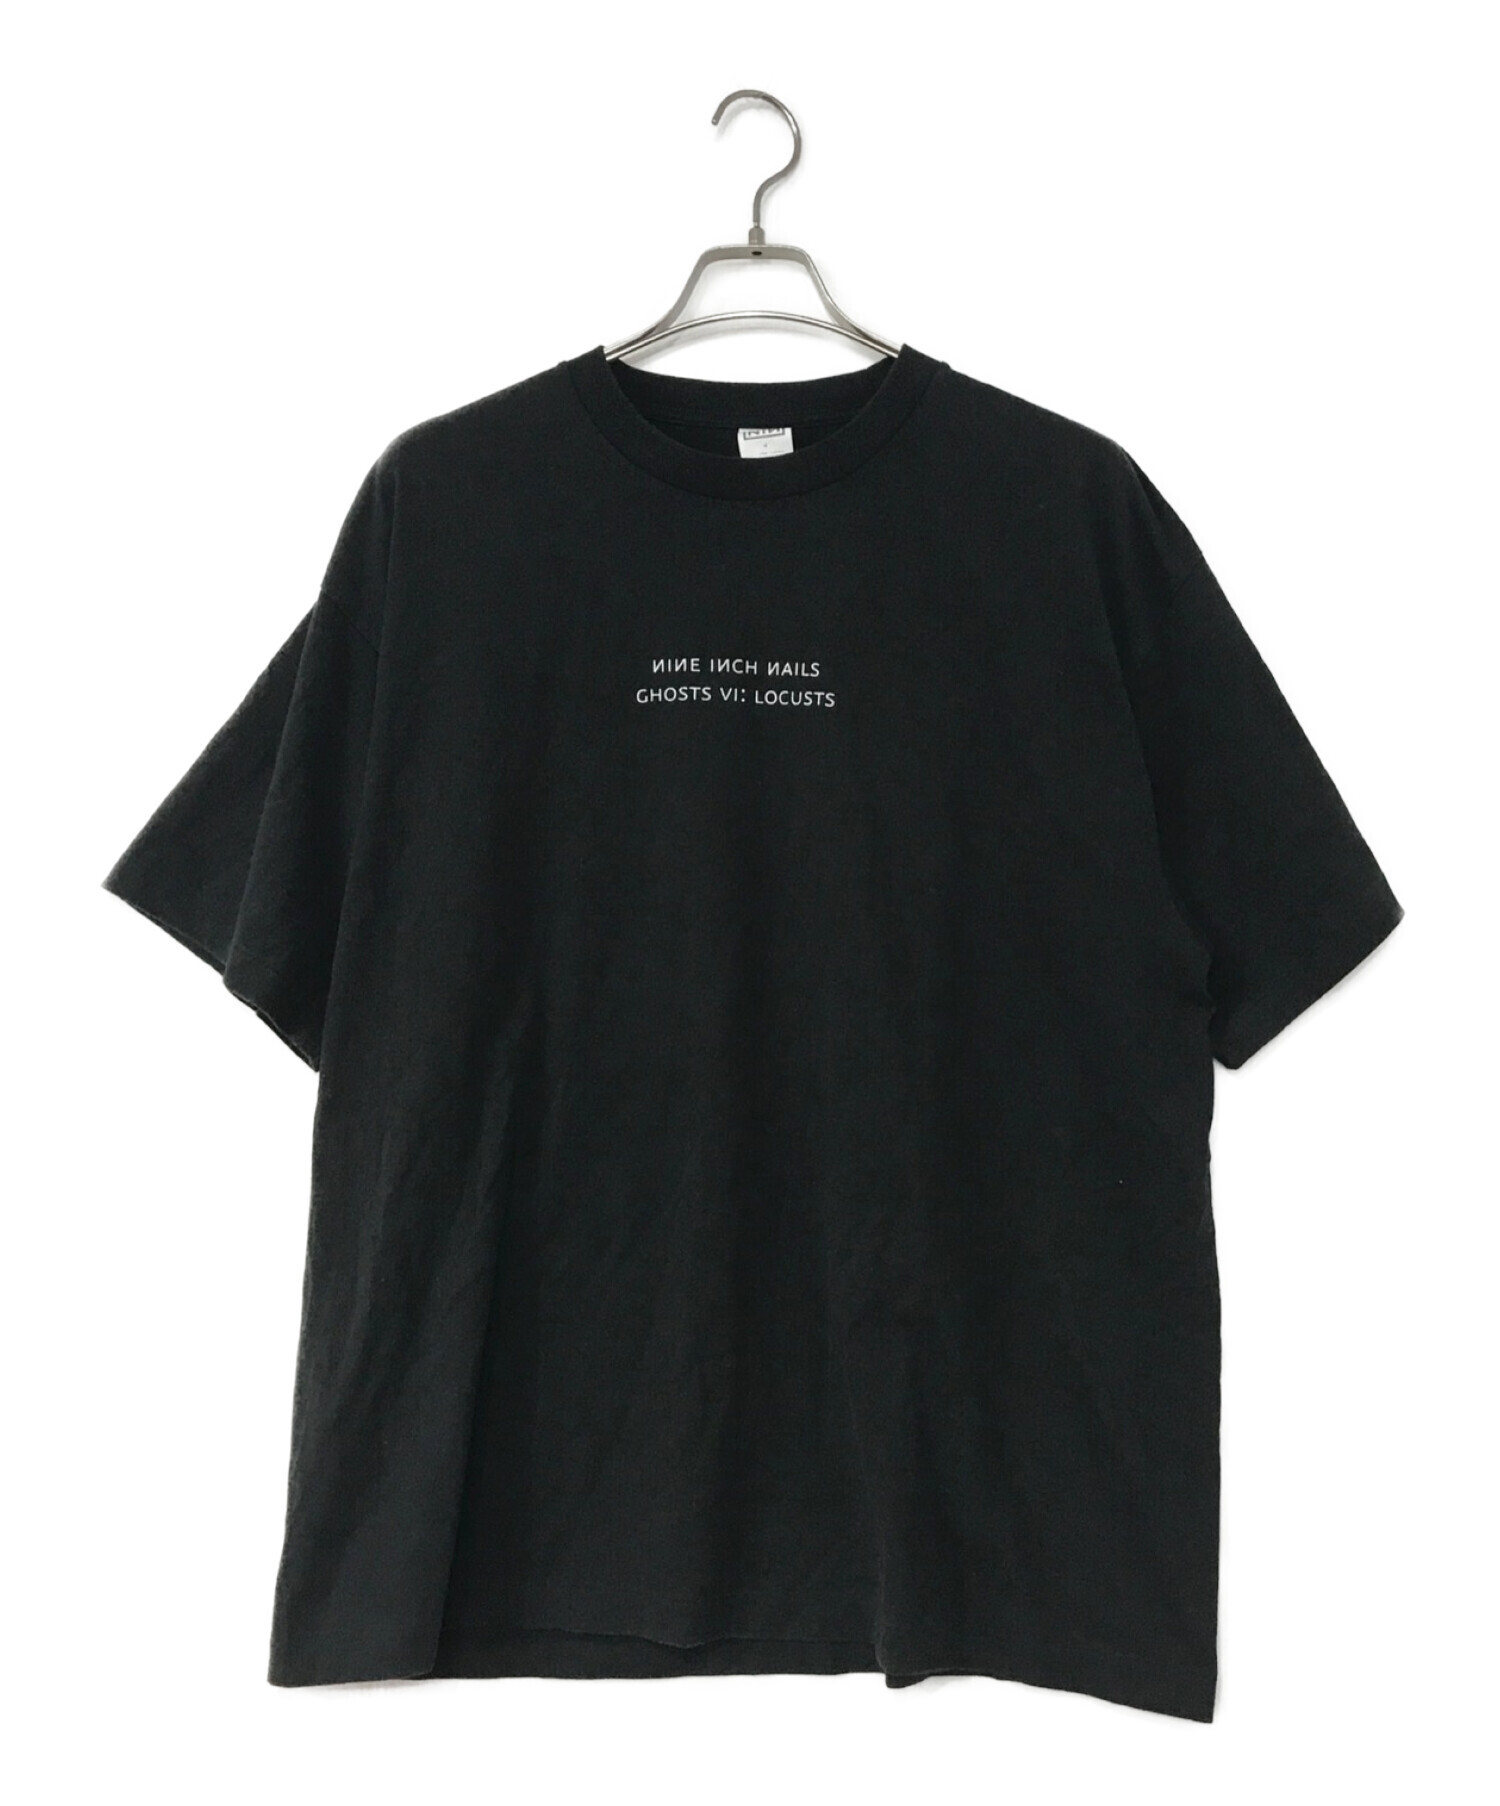 Tシャツ/カットソー(七分/長袖)comoli Nine Inch Nails biotop ロンT 4 ...